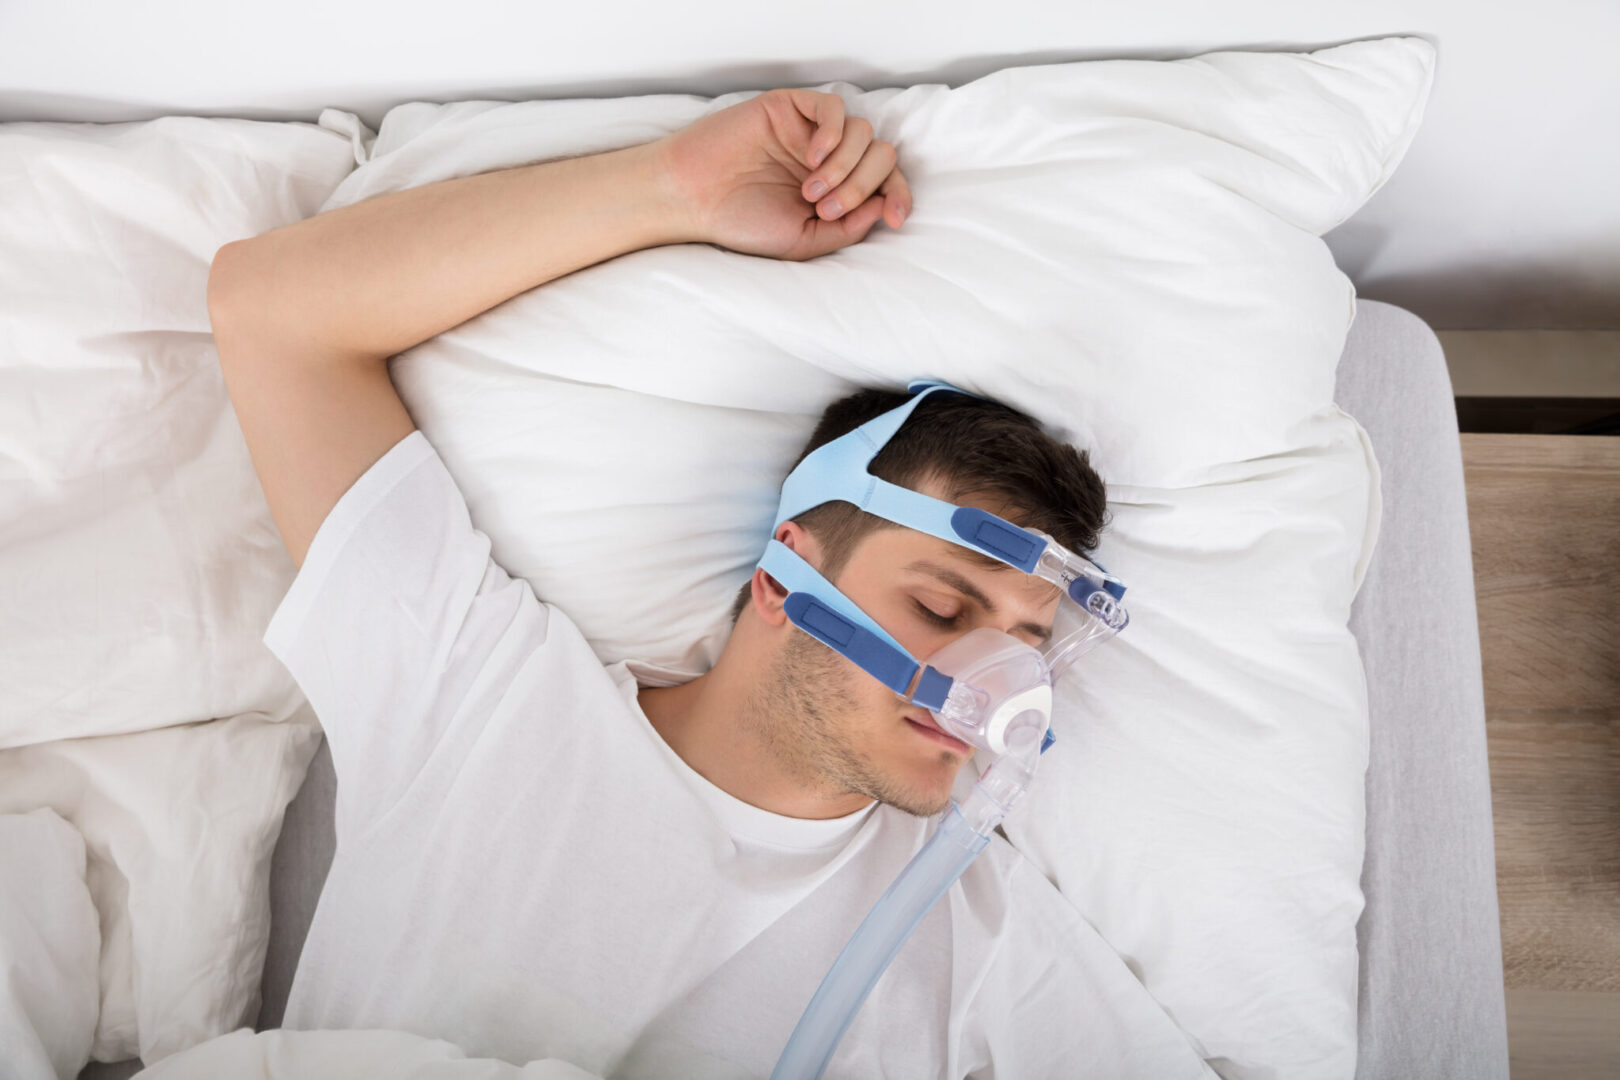 Sleep Apnea Treatment at Aspire Surgical in Salt lake City, UT